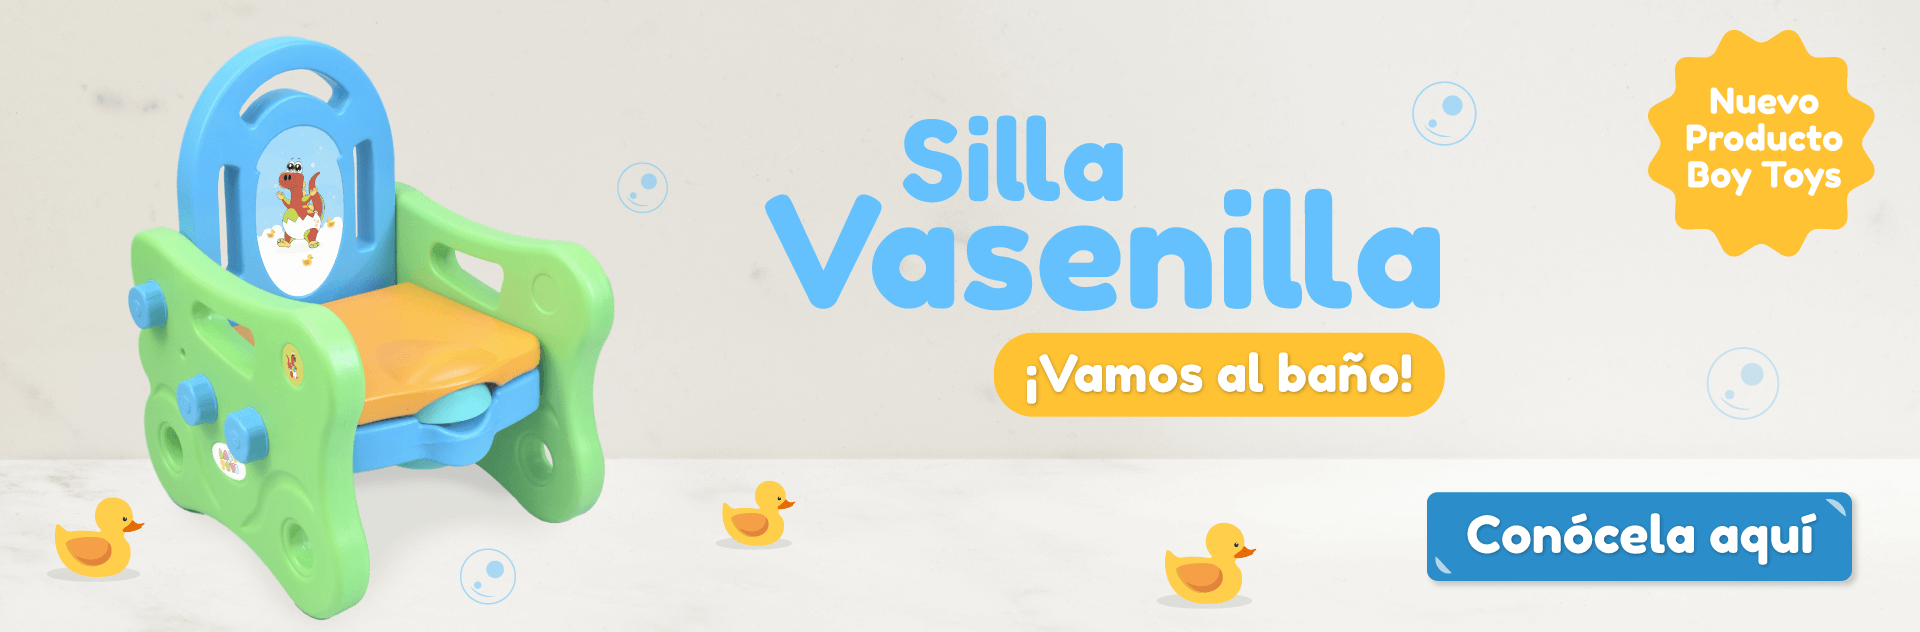 Silla-vasenilla-boy-toys